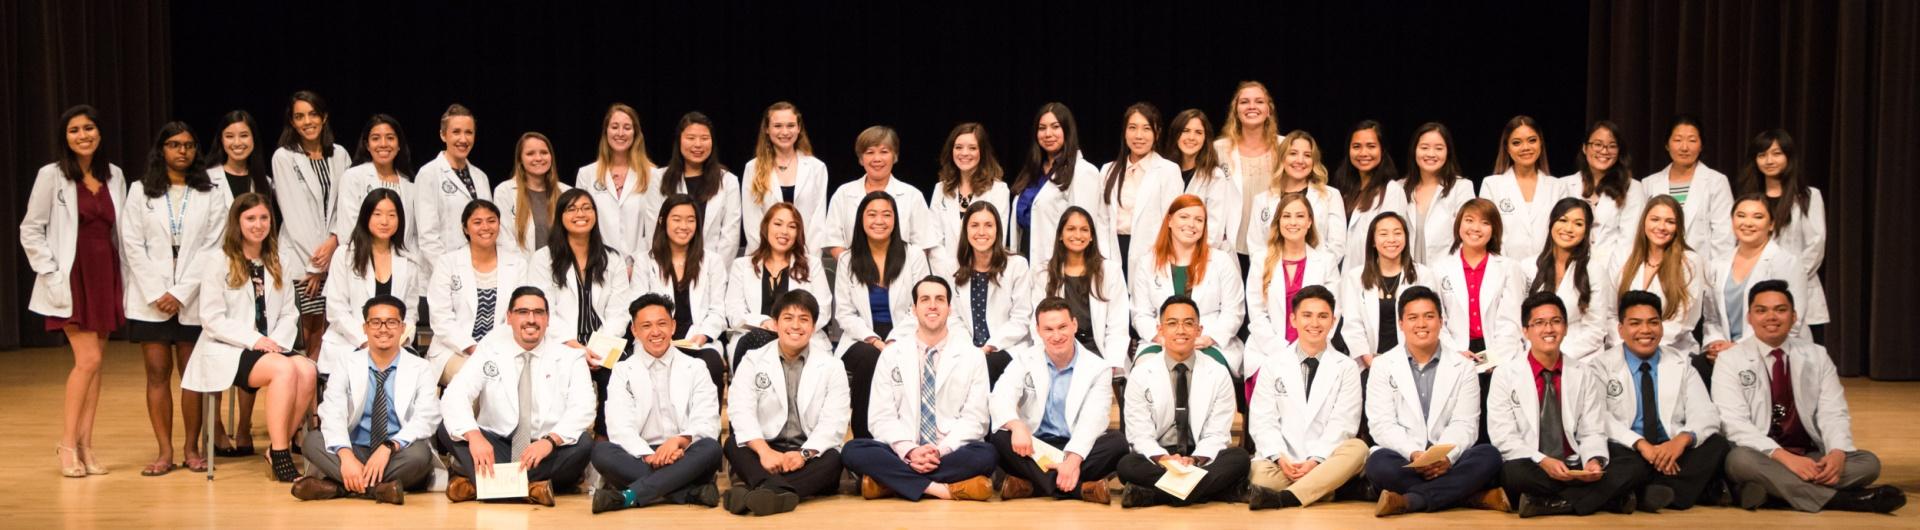 Nursing students receive white coats